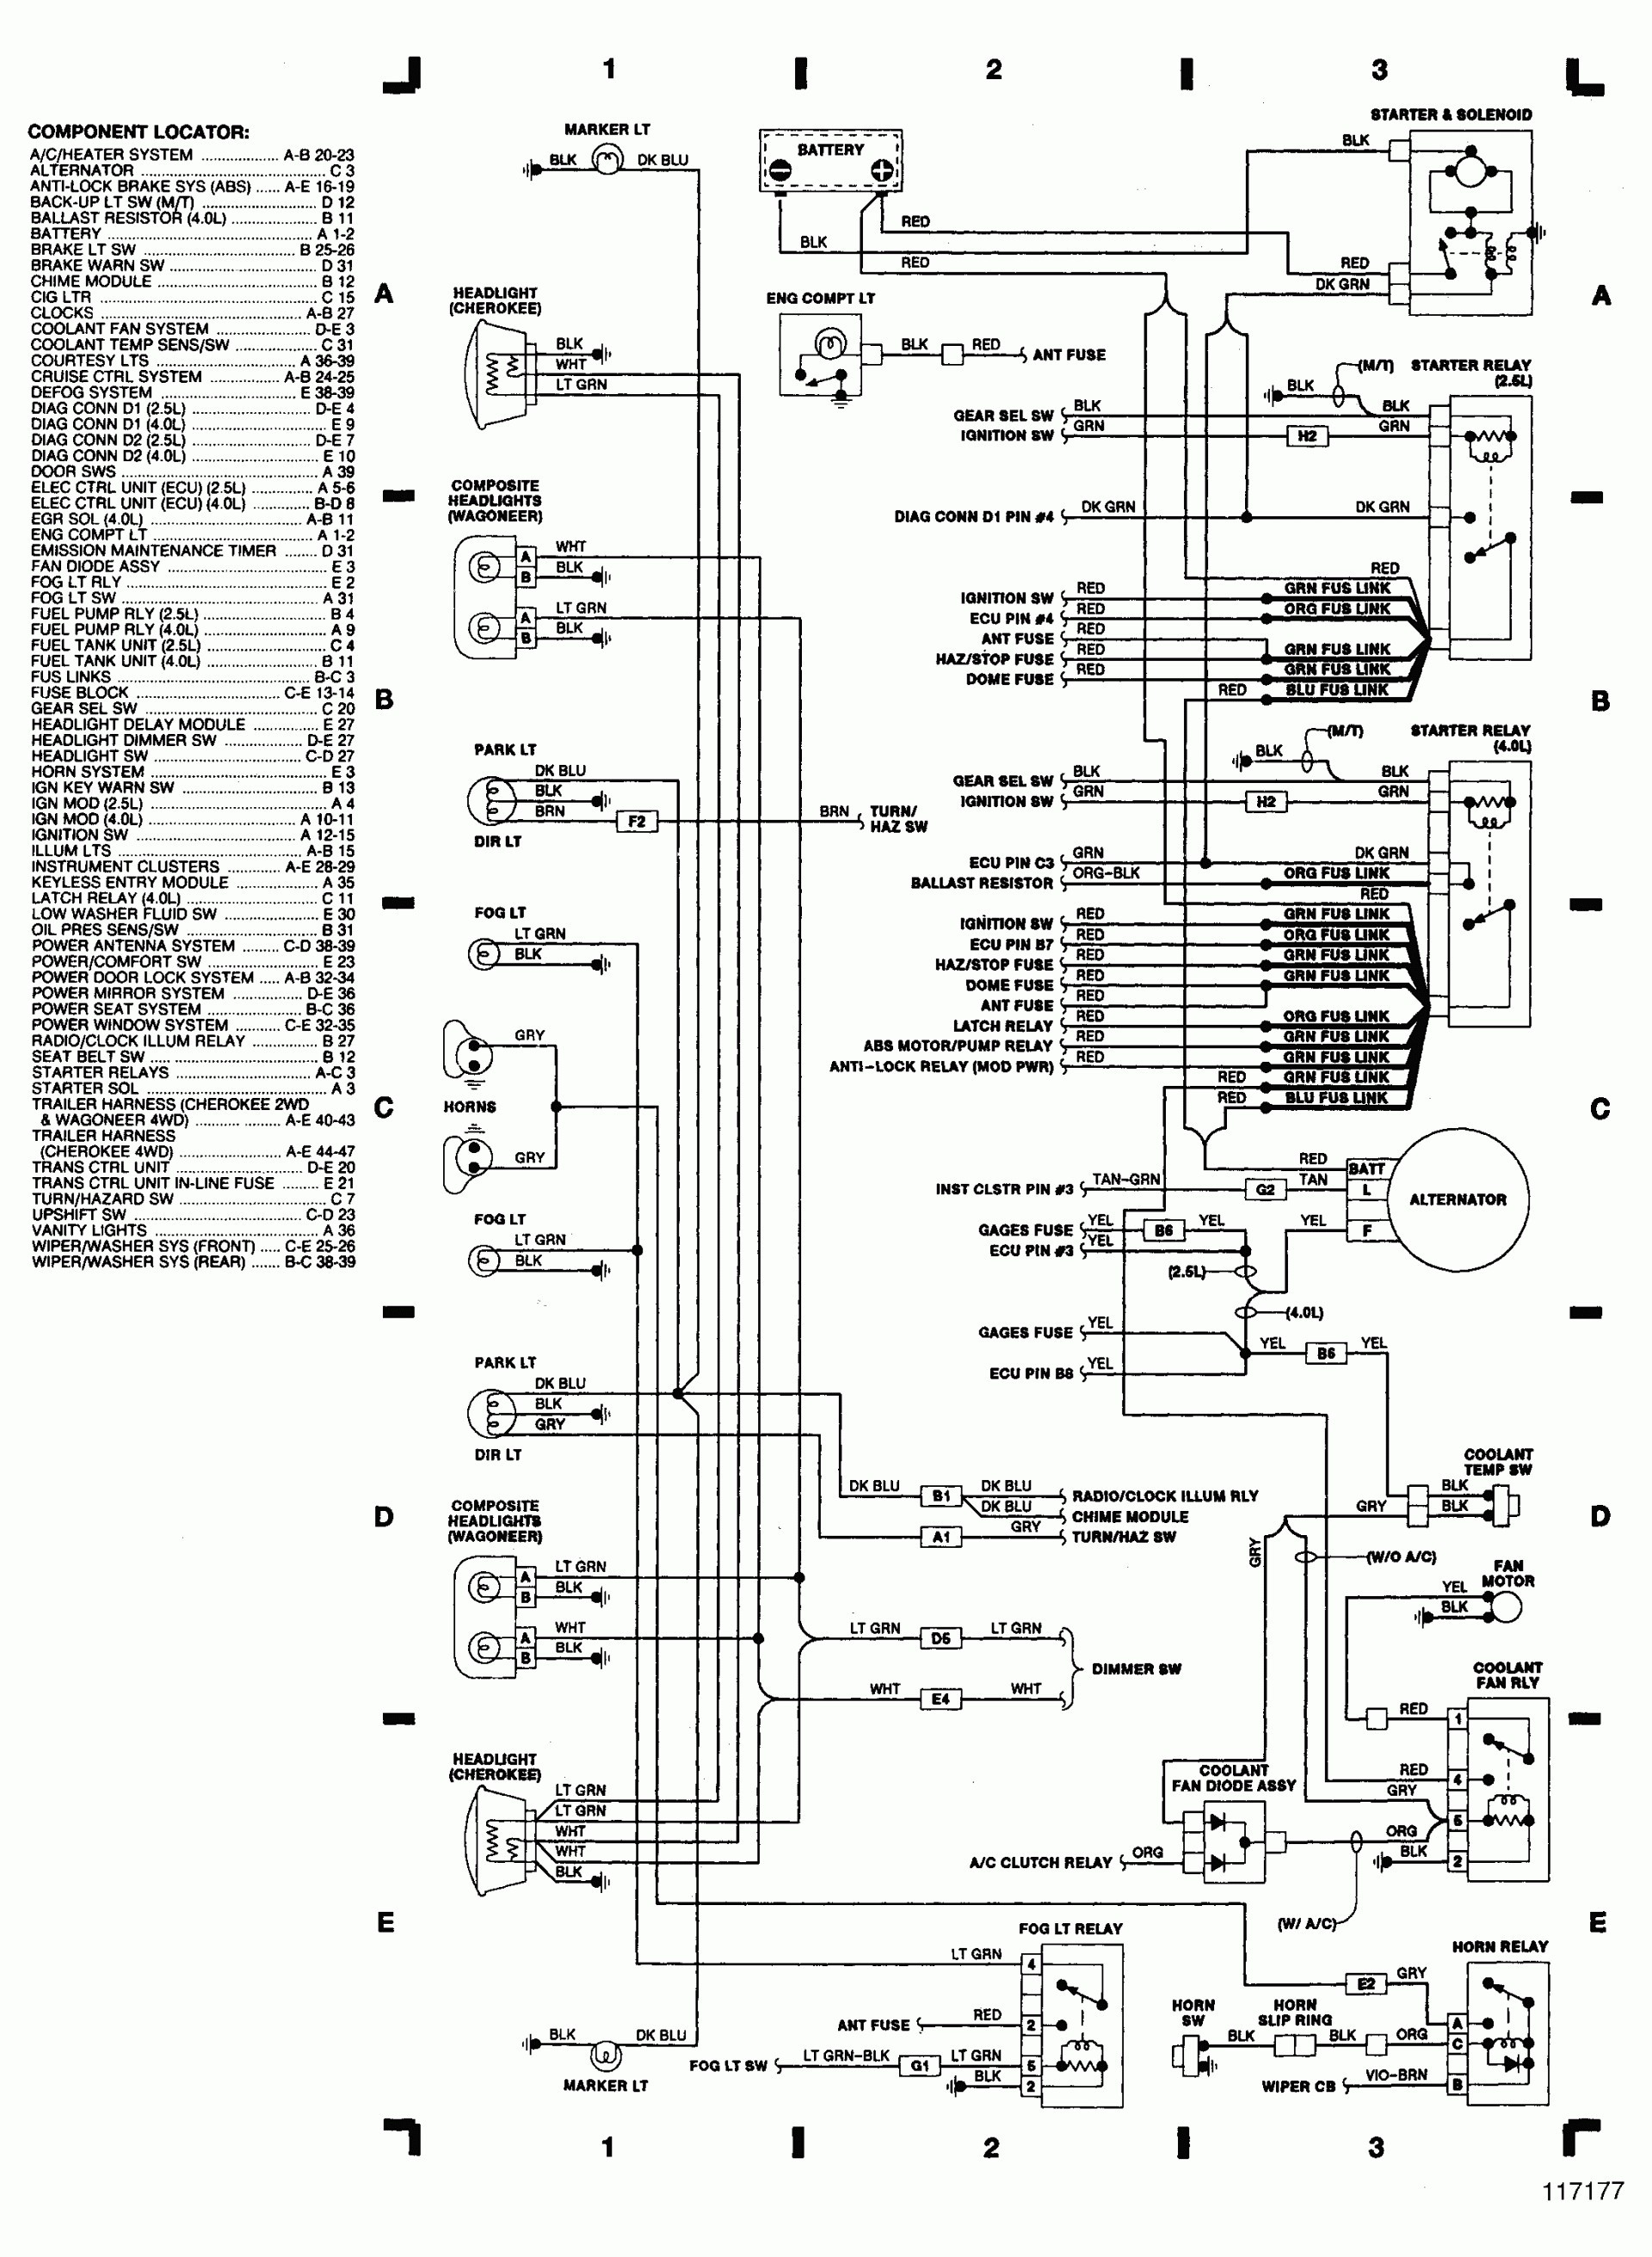 John Deere 6400 Dimmer Switch Wiring Diagram from mainetreasurechest.com